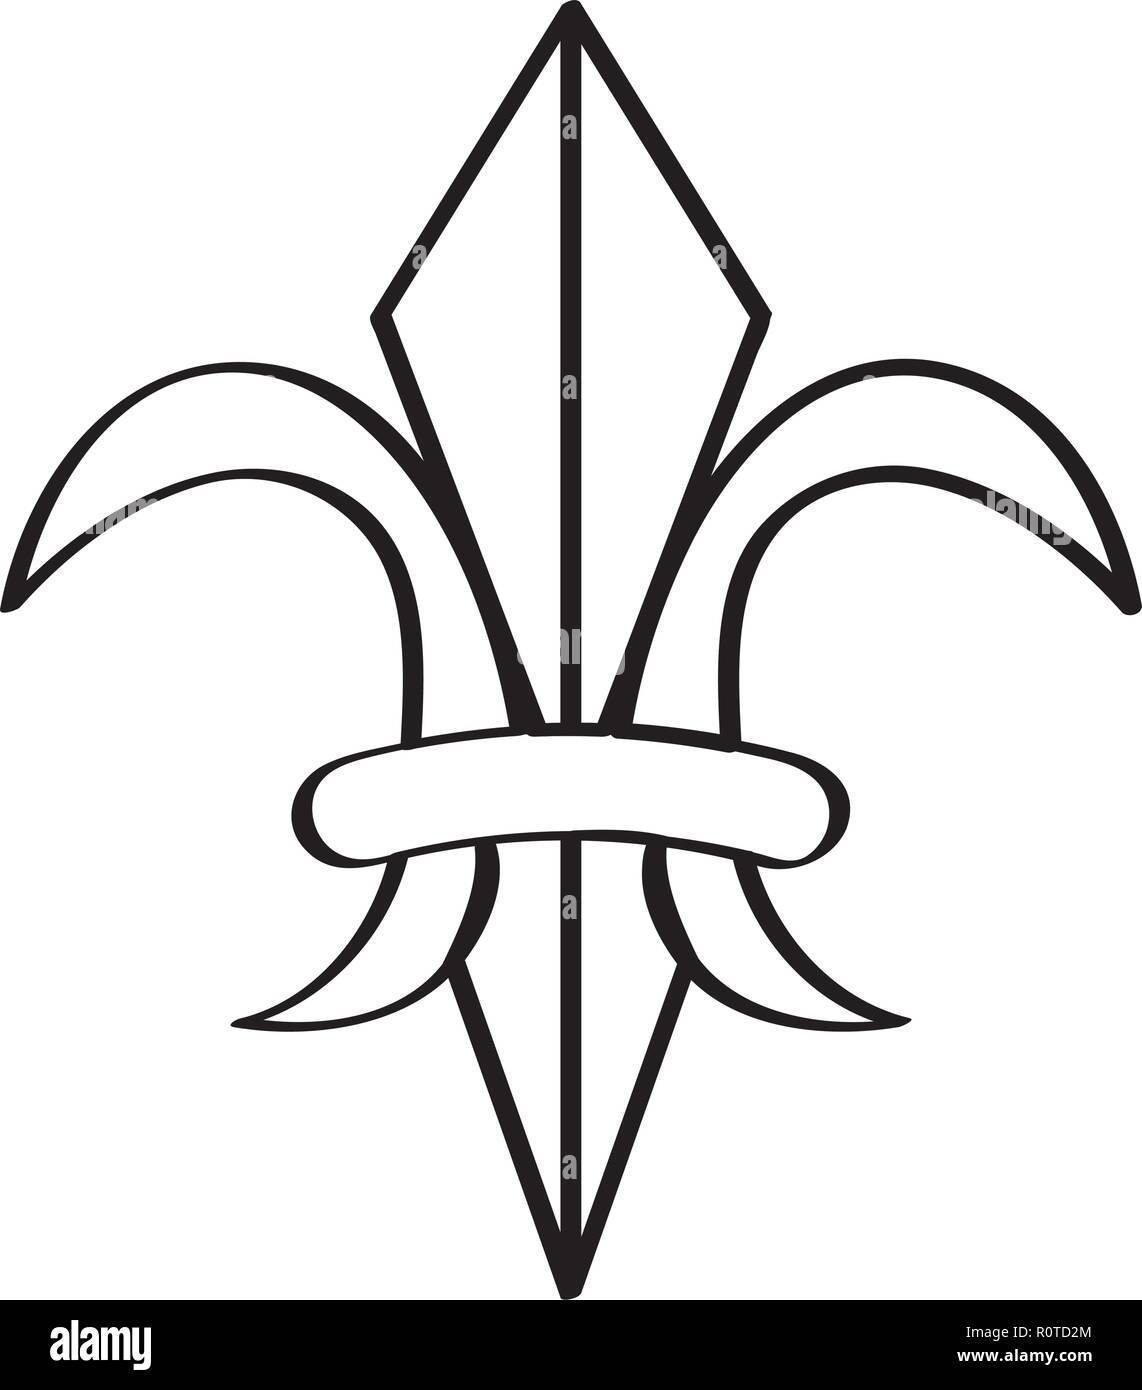 Mardi gras symbol. Fleur de lys outline Stock Vector Image & Art - Alamy